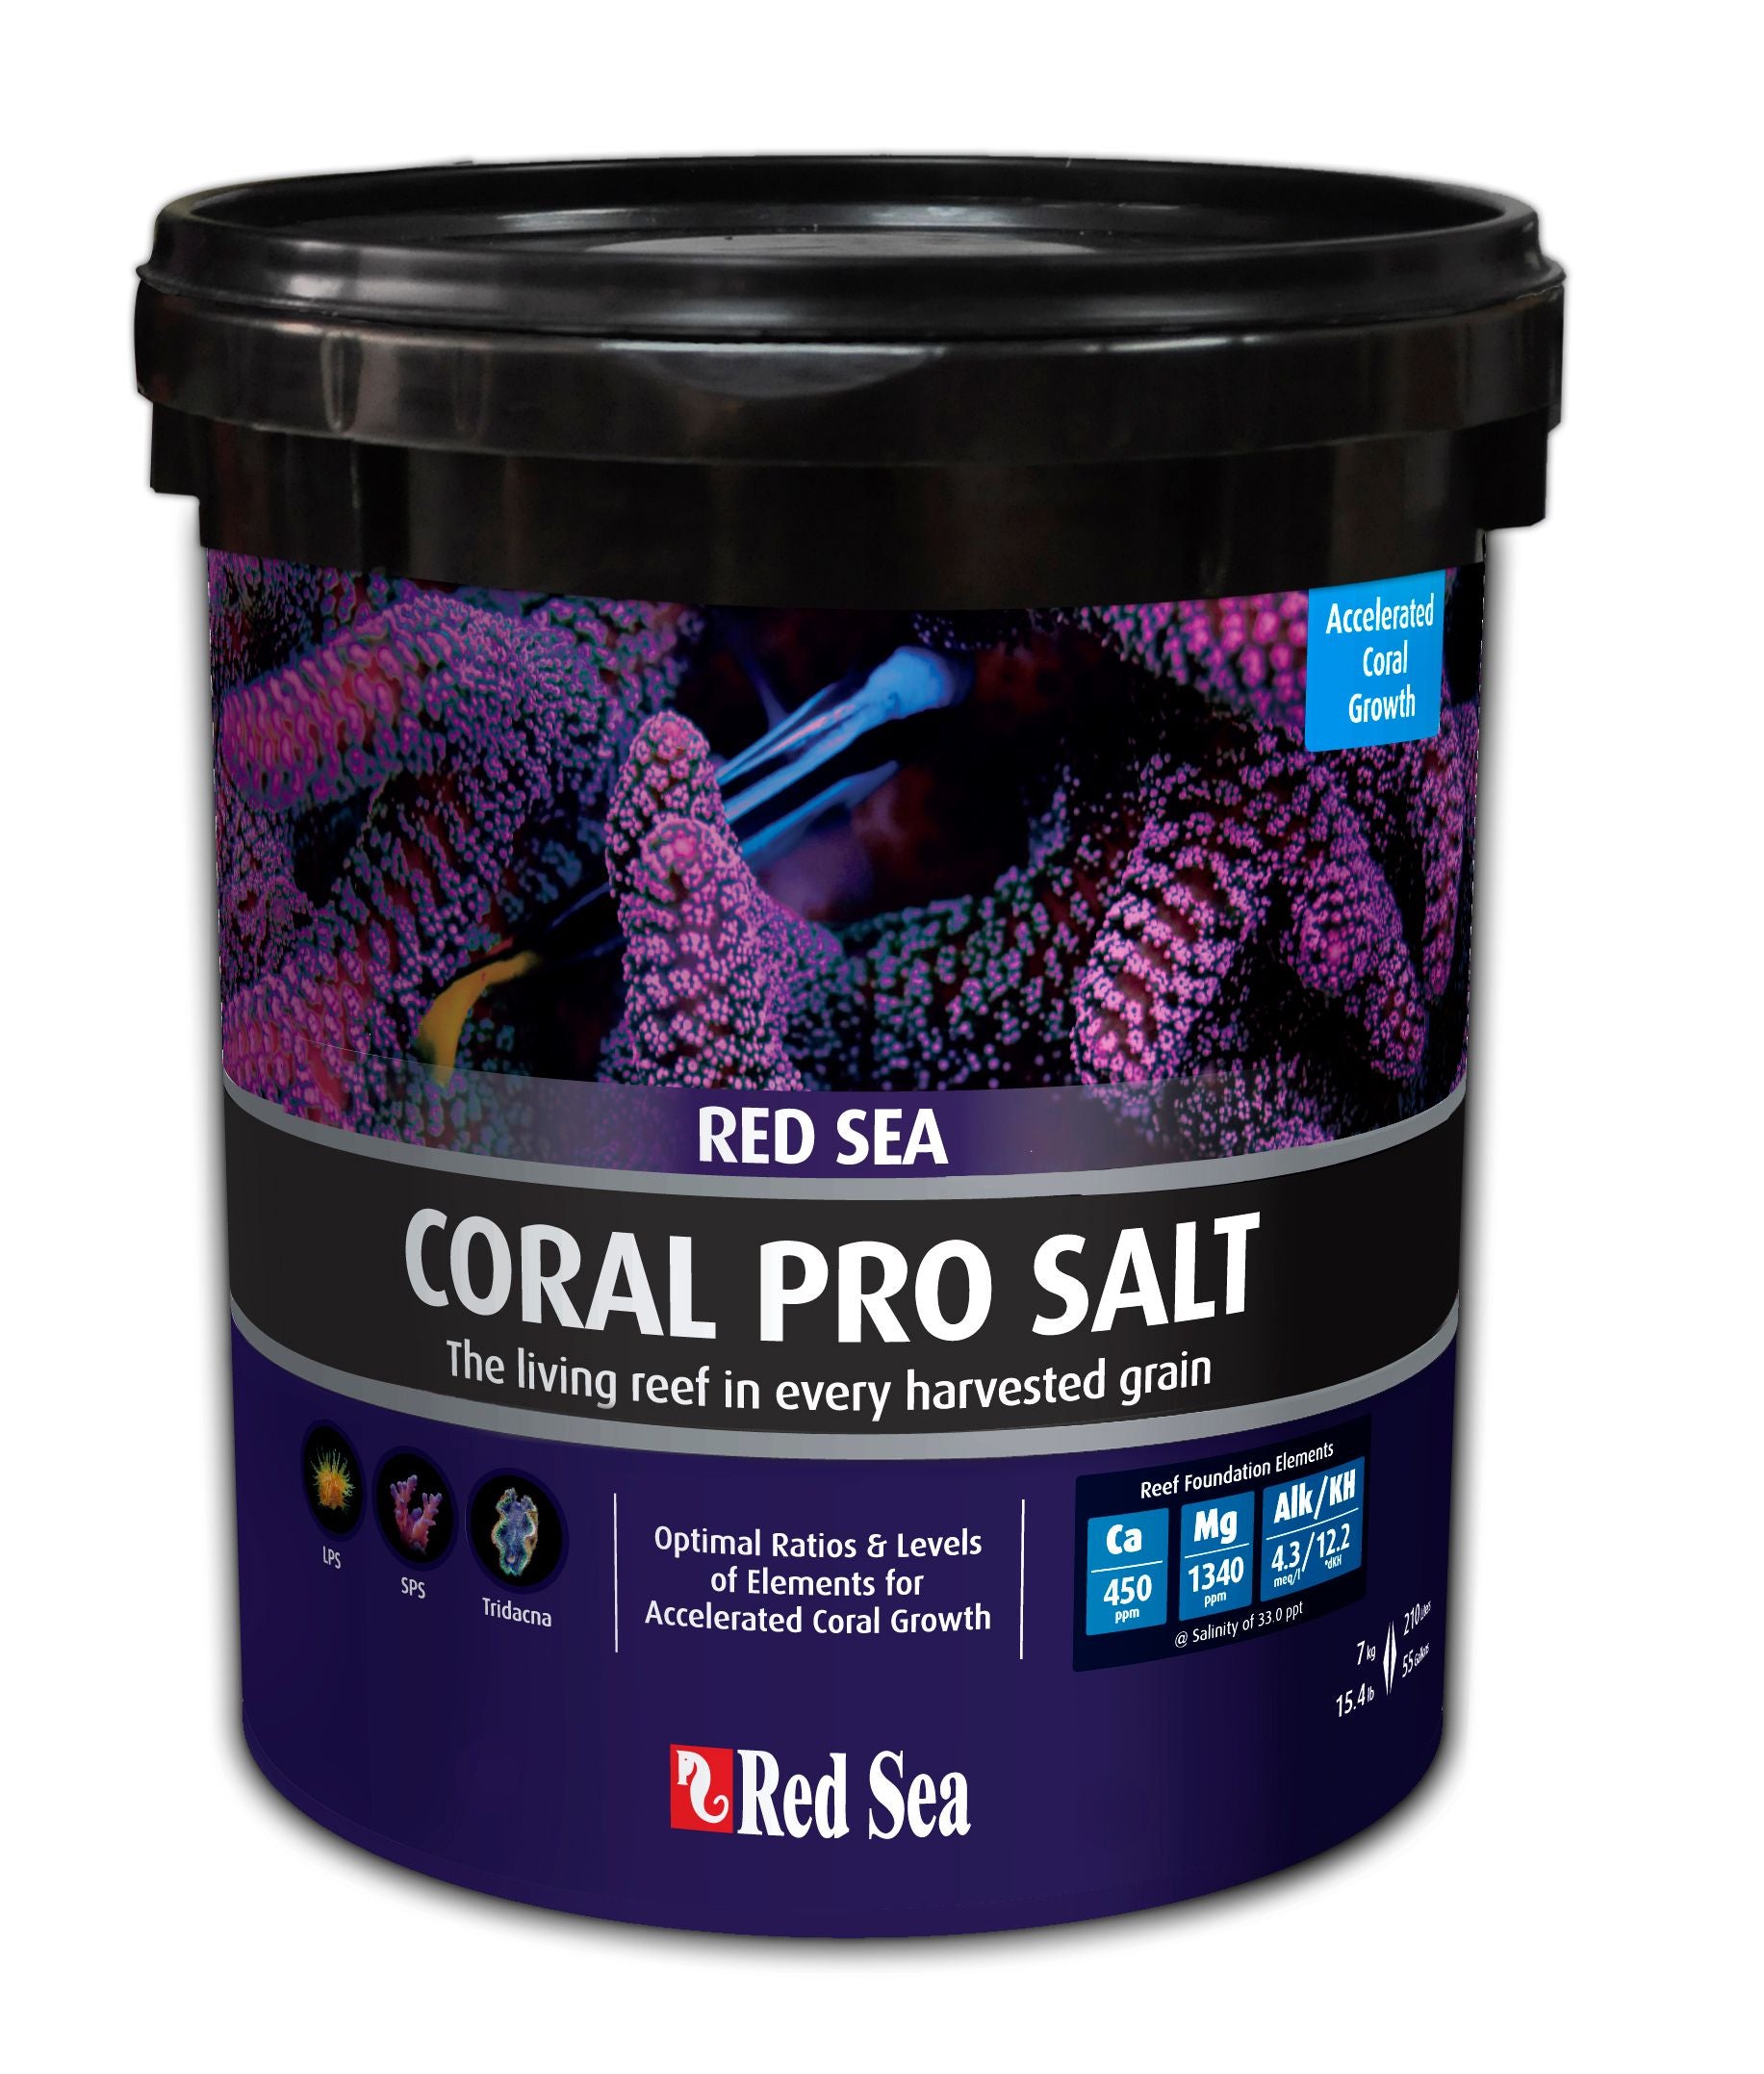 Red sea coral pro salt 7kg bucket